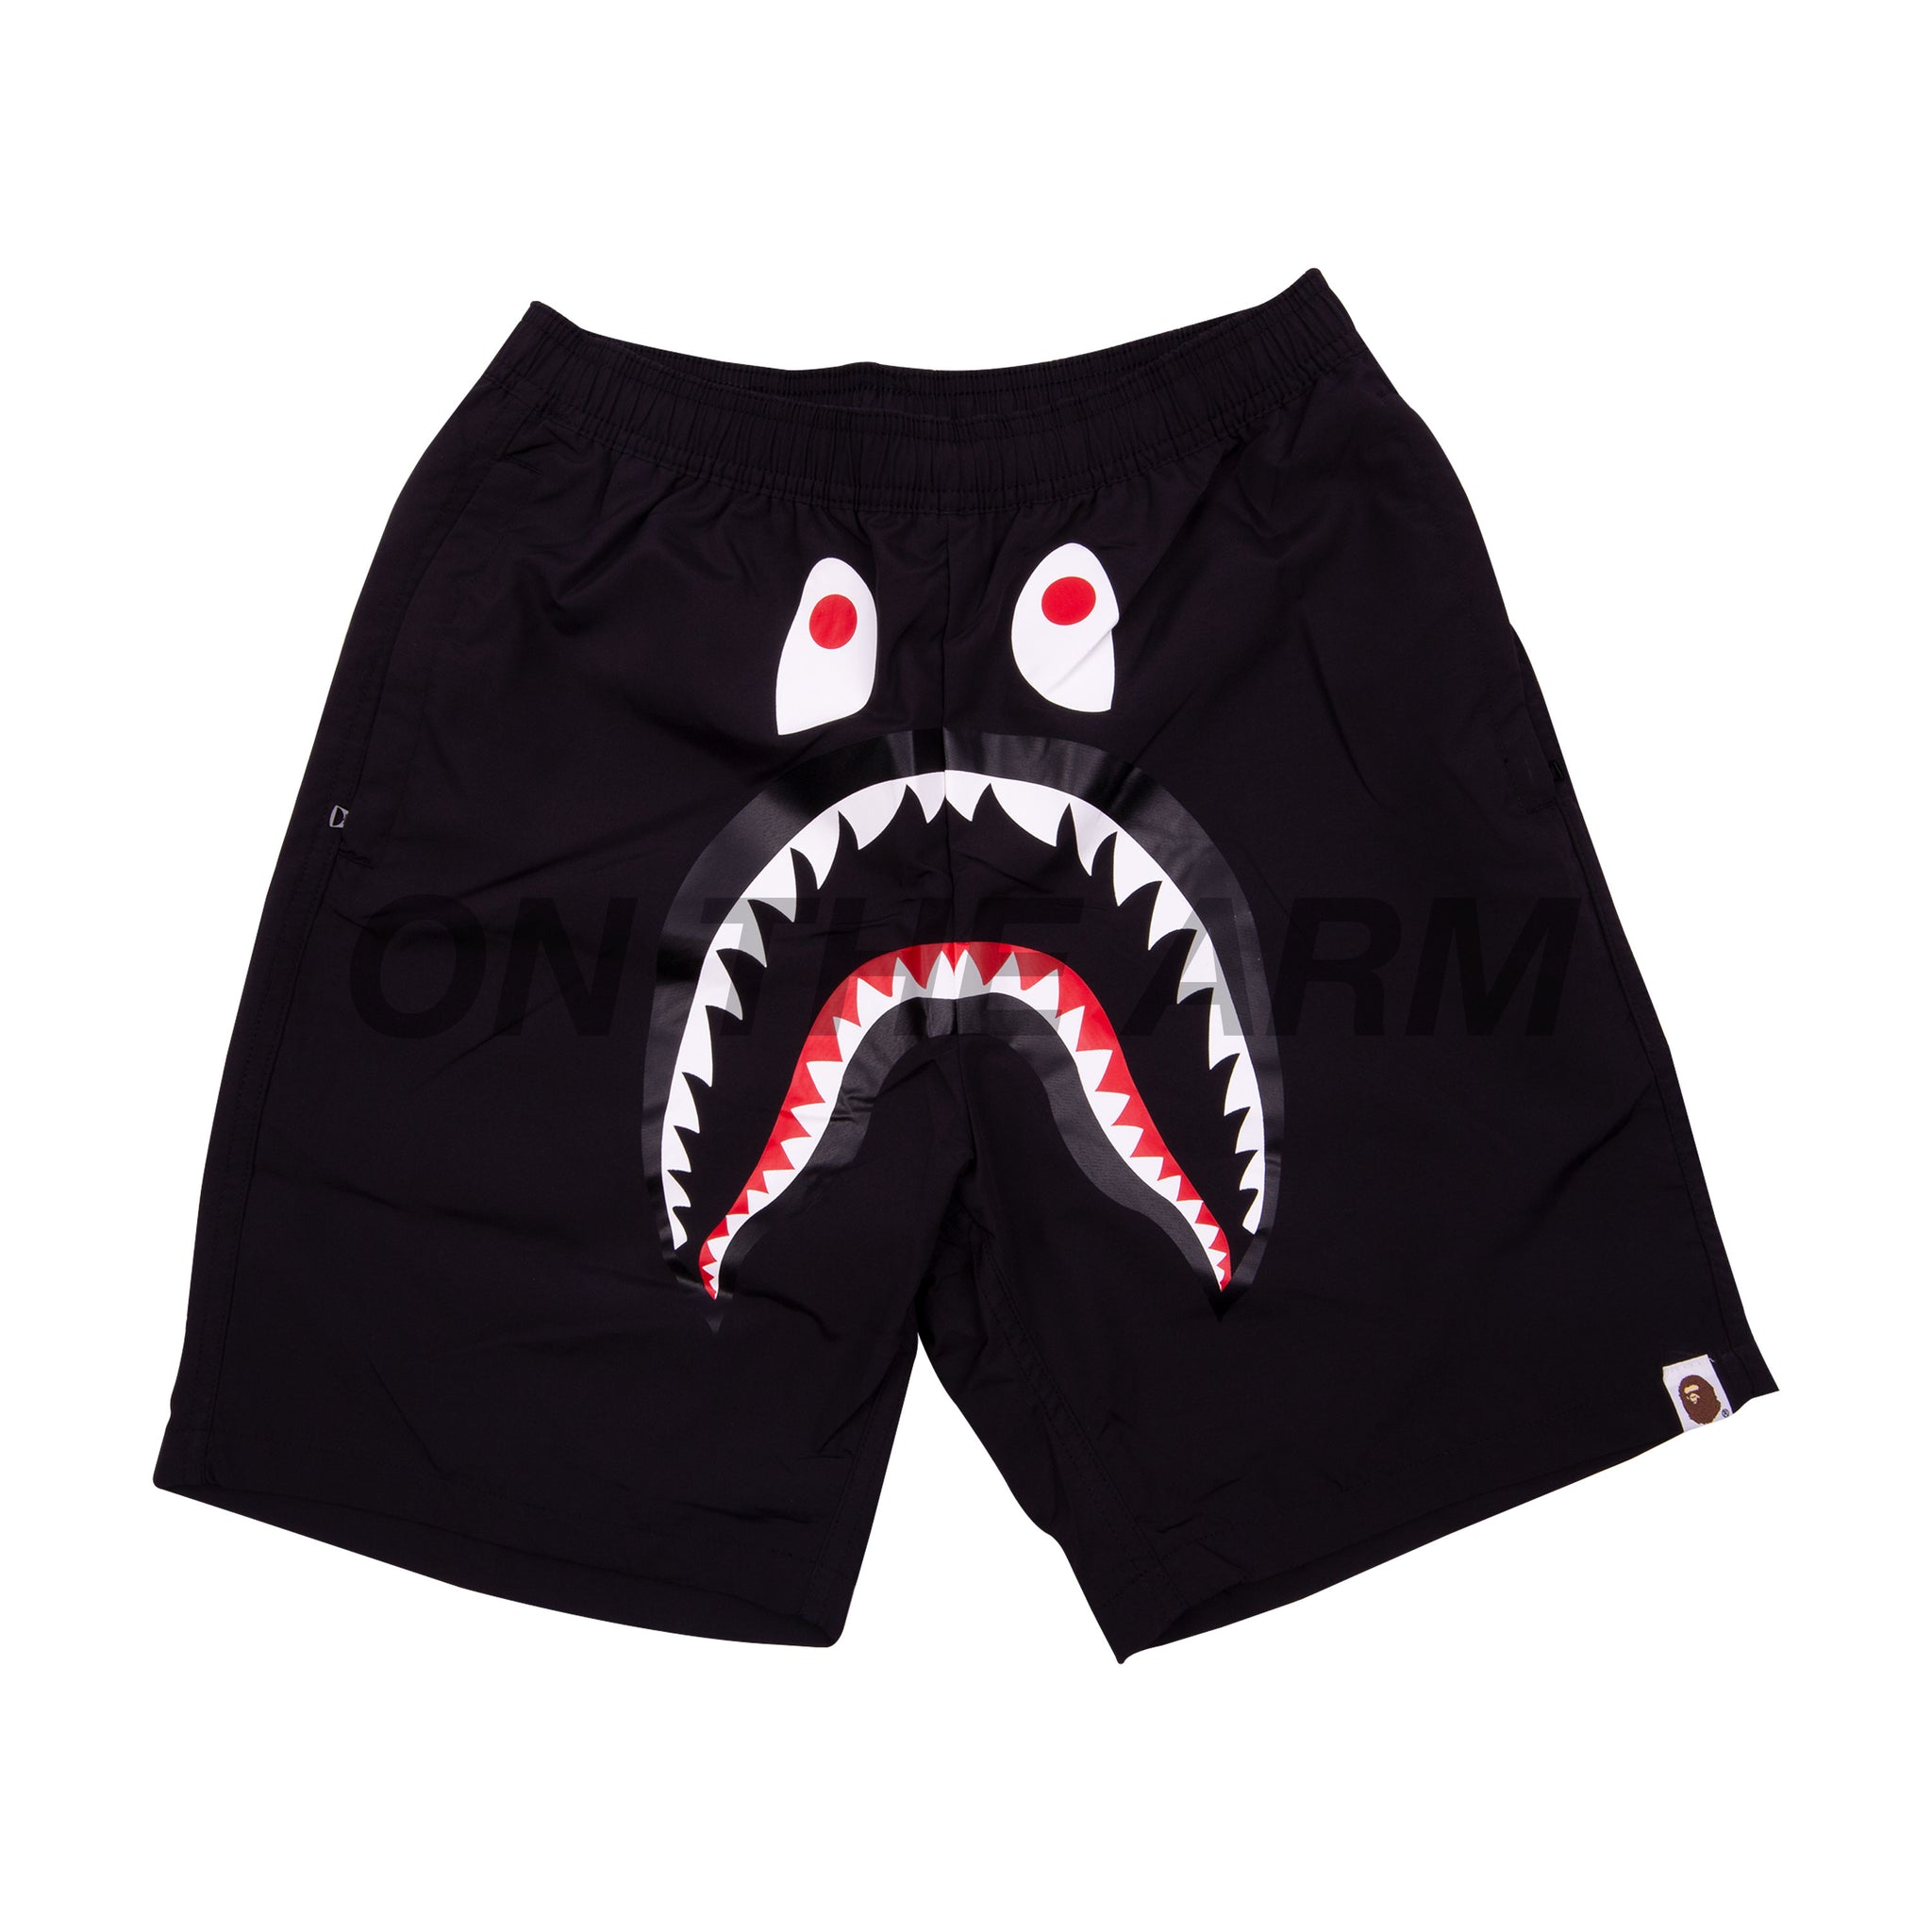 Bape Black Shark Water Shorts